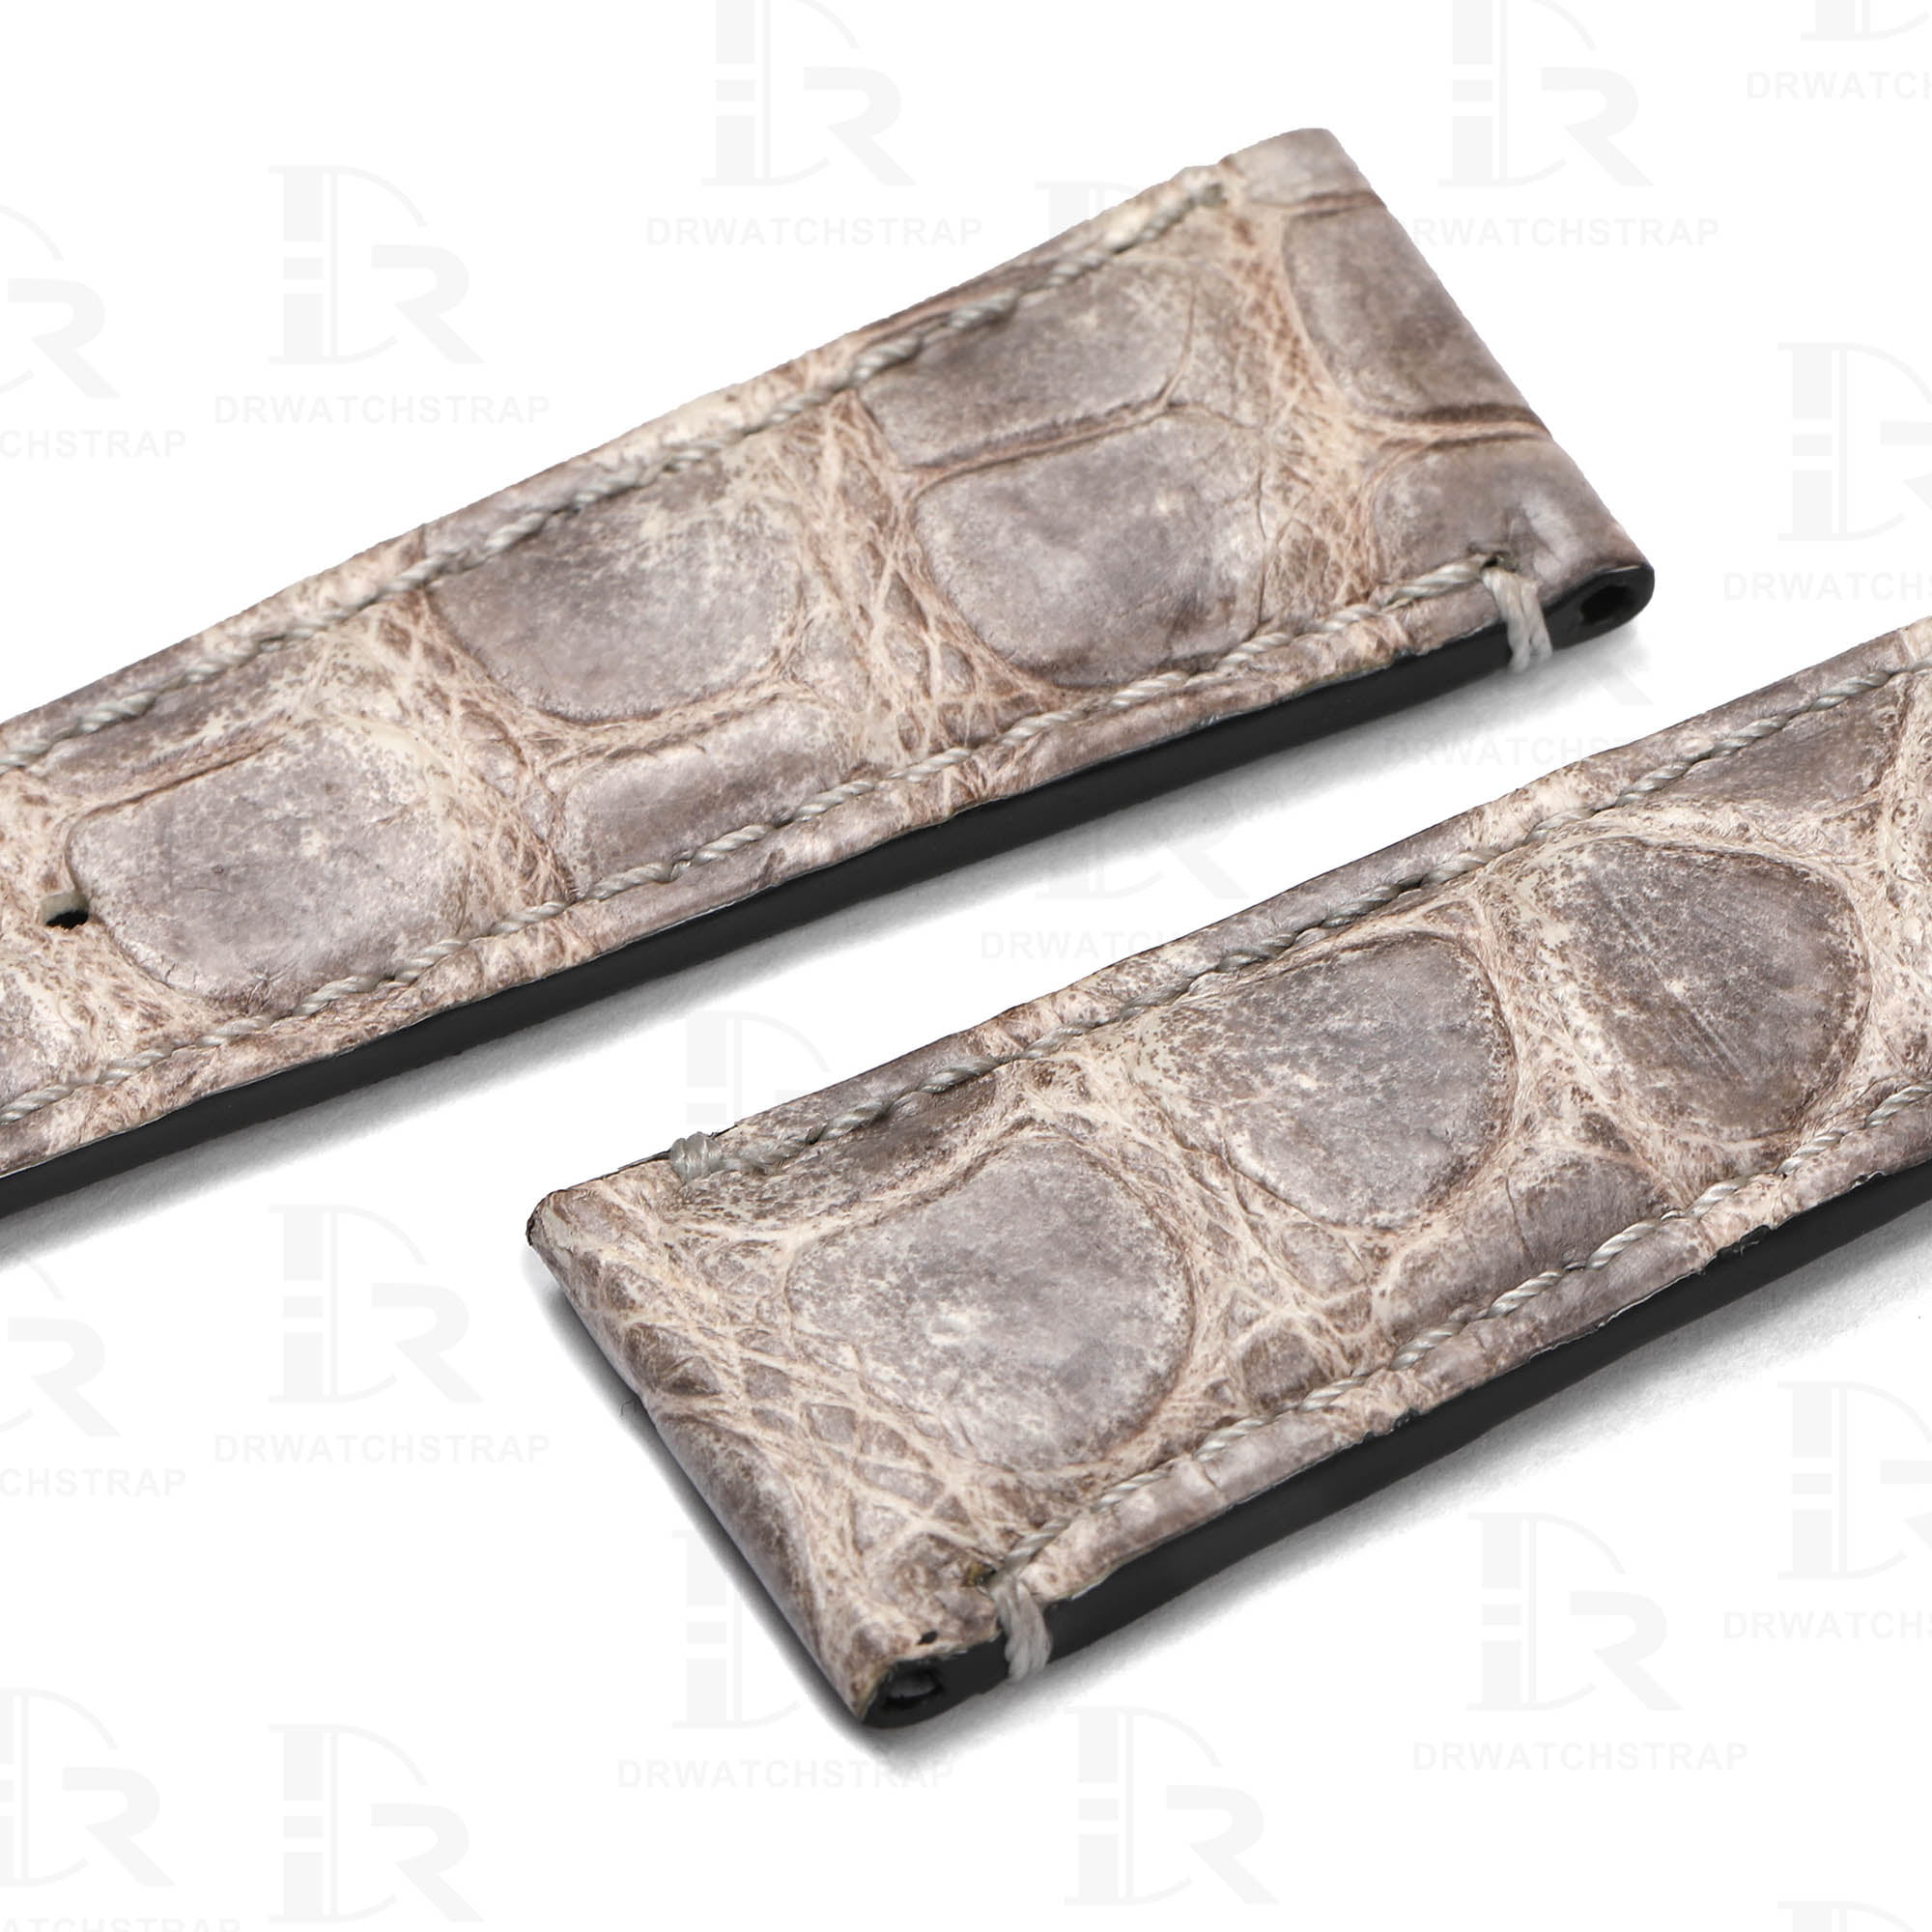 Genuine Himalayan alligator leather material